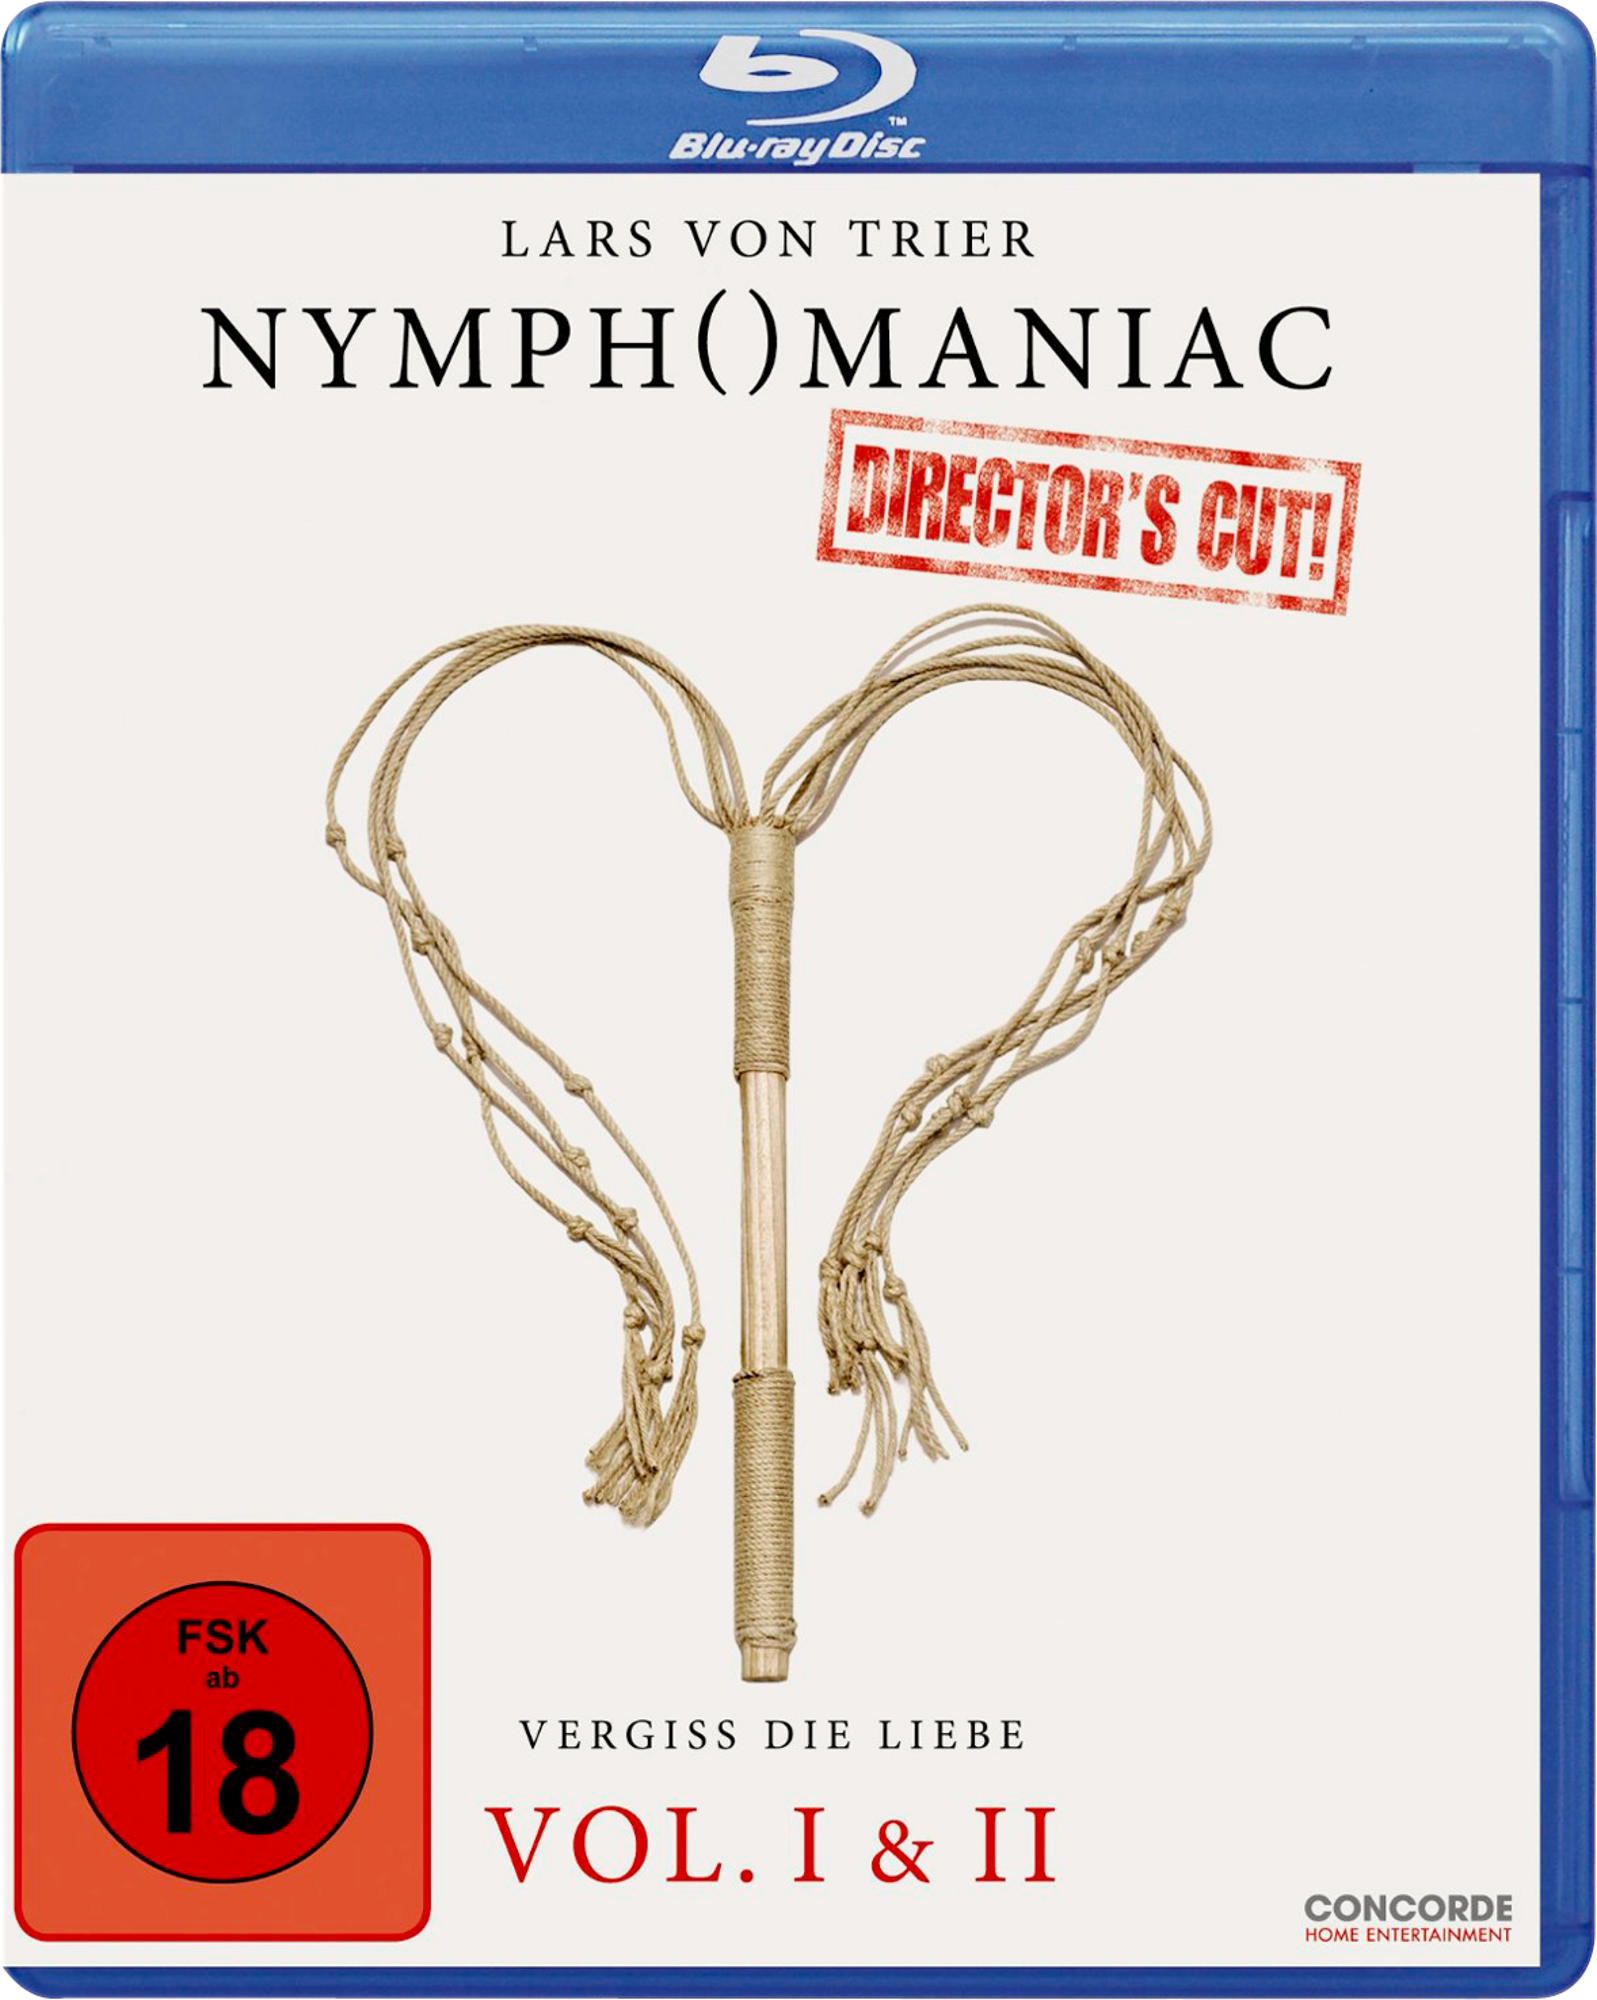 II Blu-ray & Nymphomaniac Vol. I